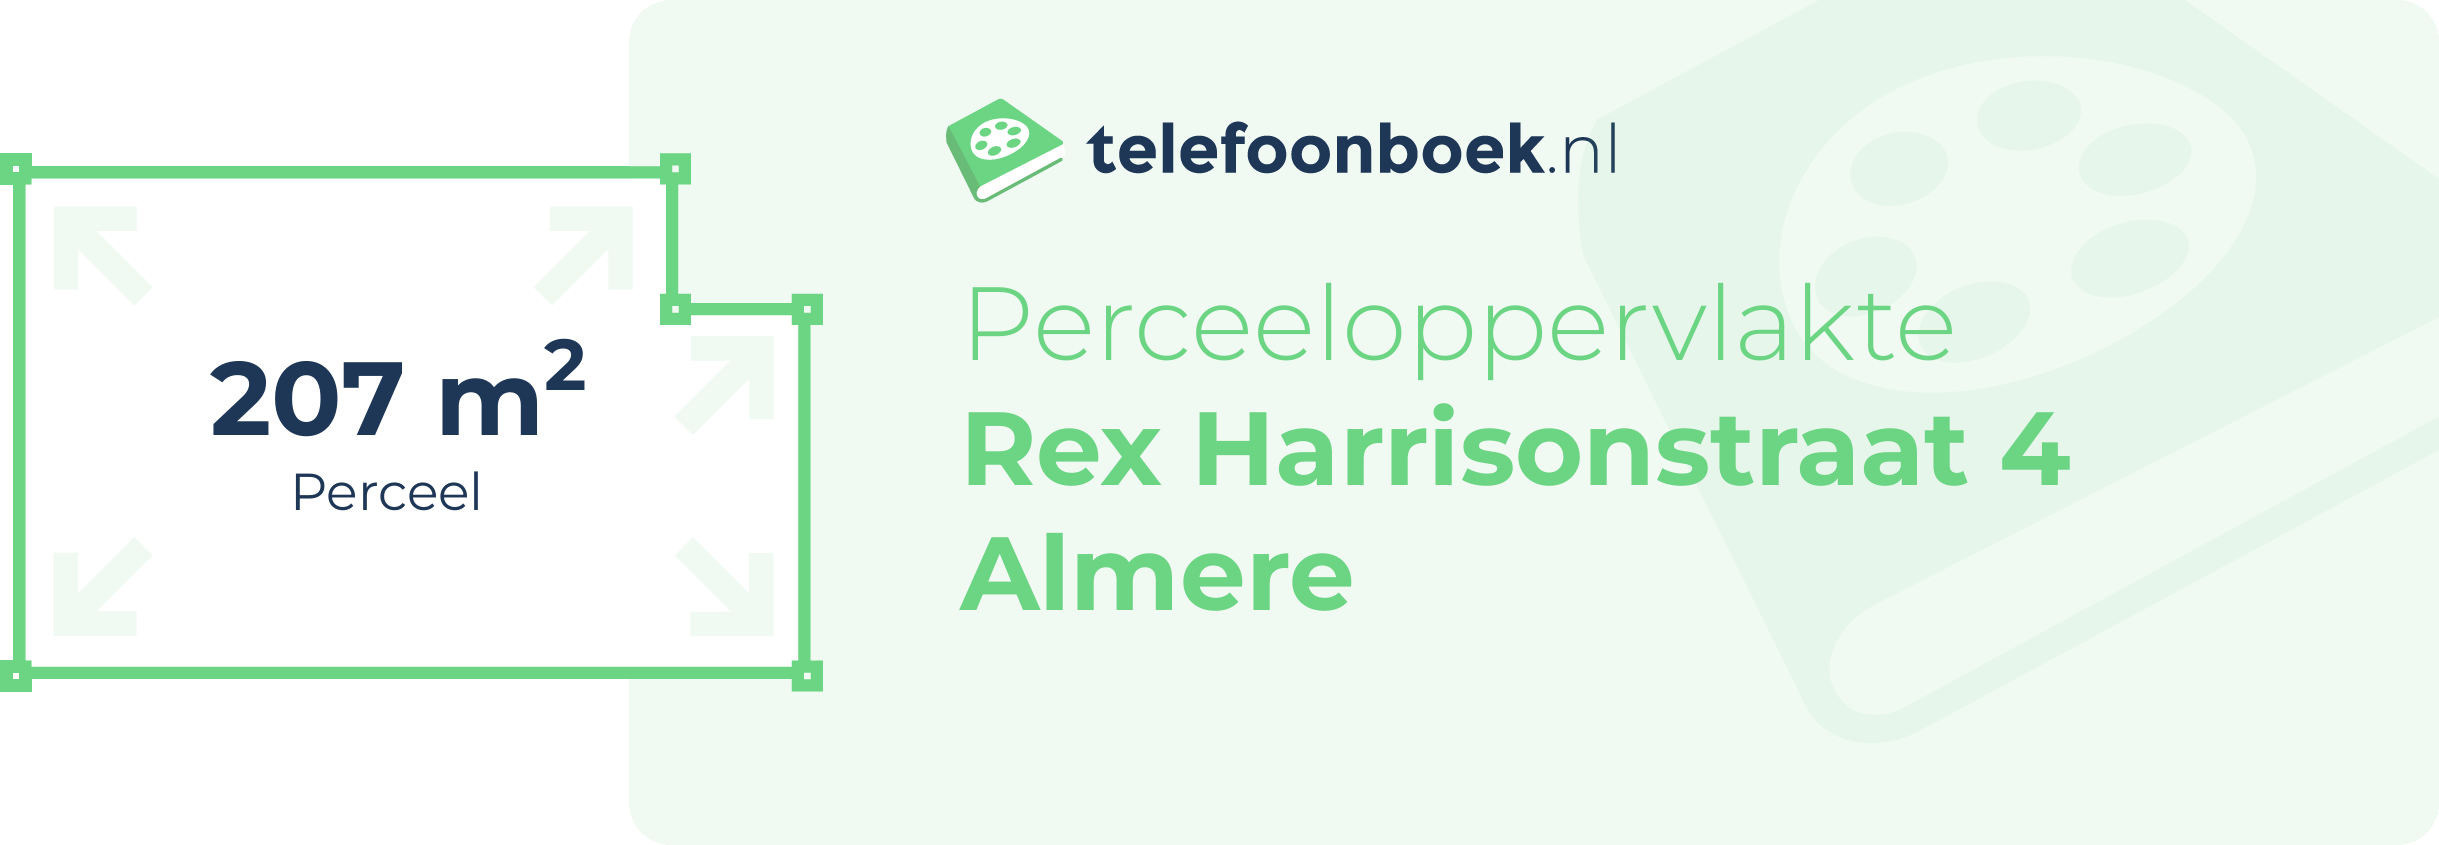 Perceeloppervlakte Rex Harrisonstraat 4 Almere